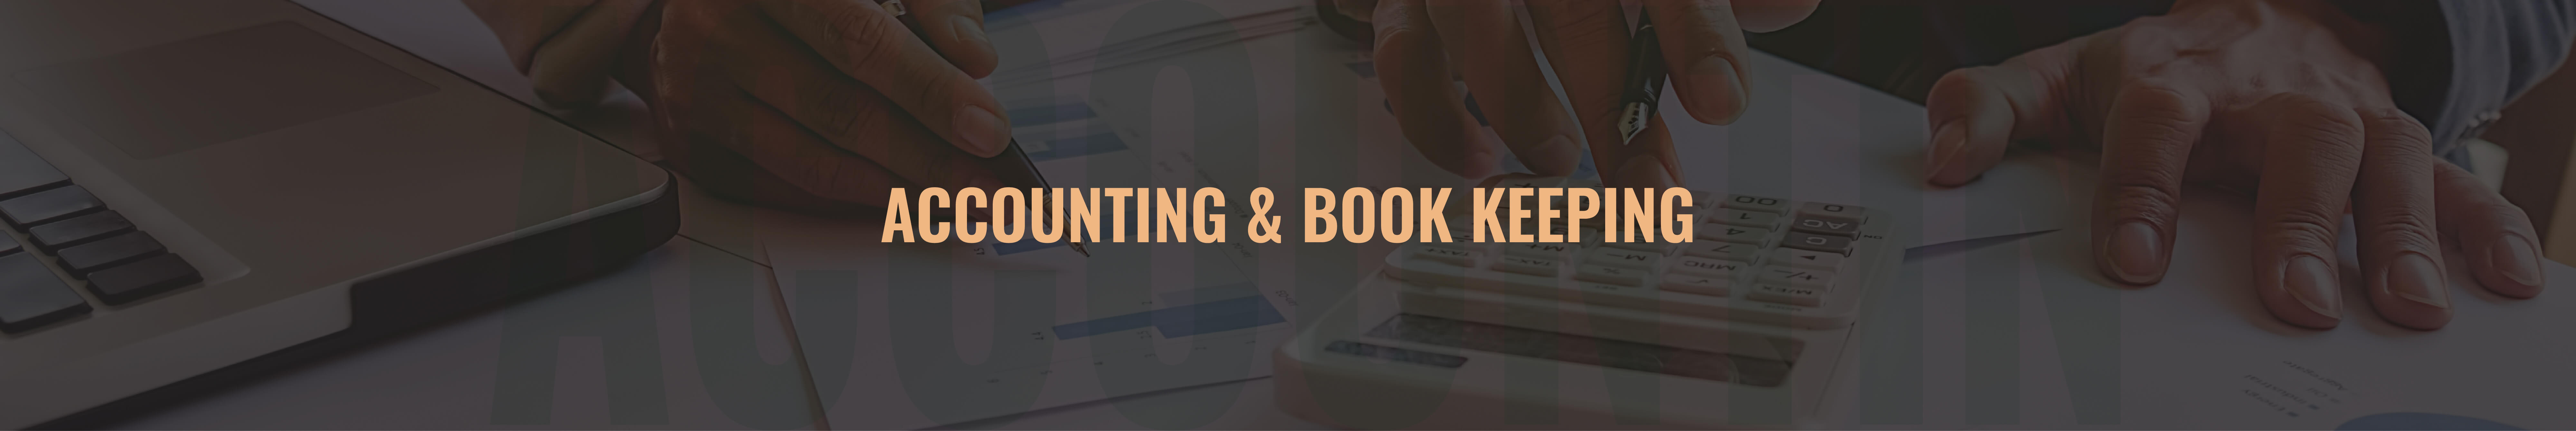 Accounting and Book Keeping